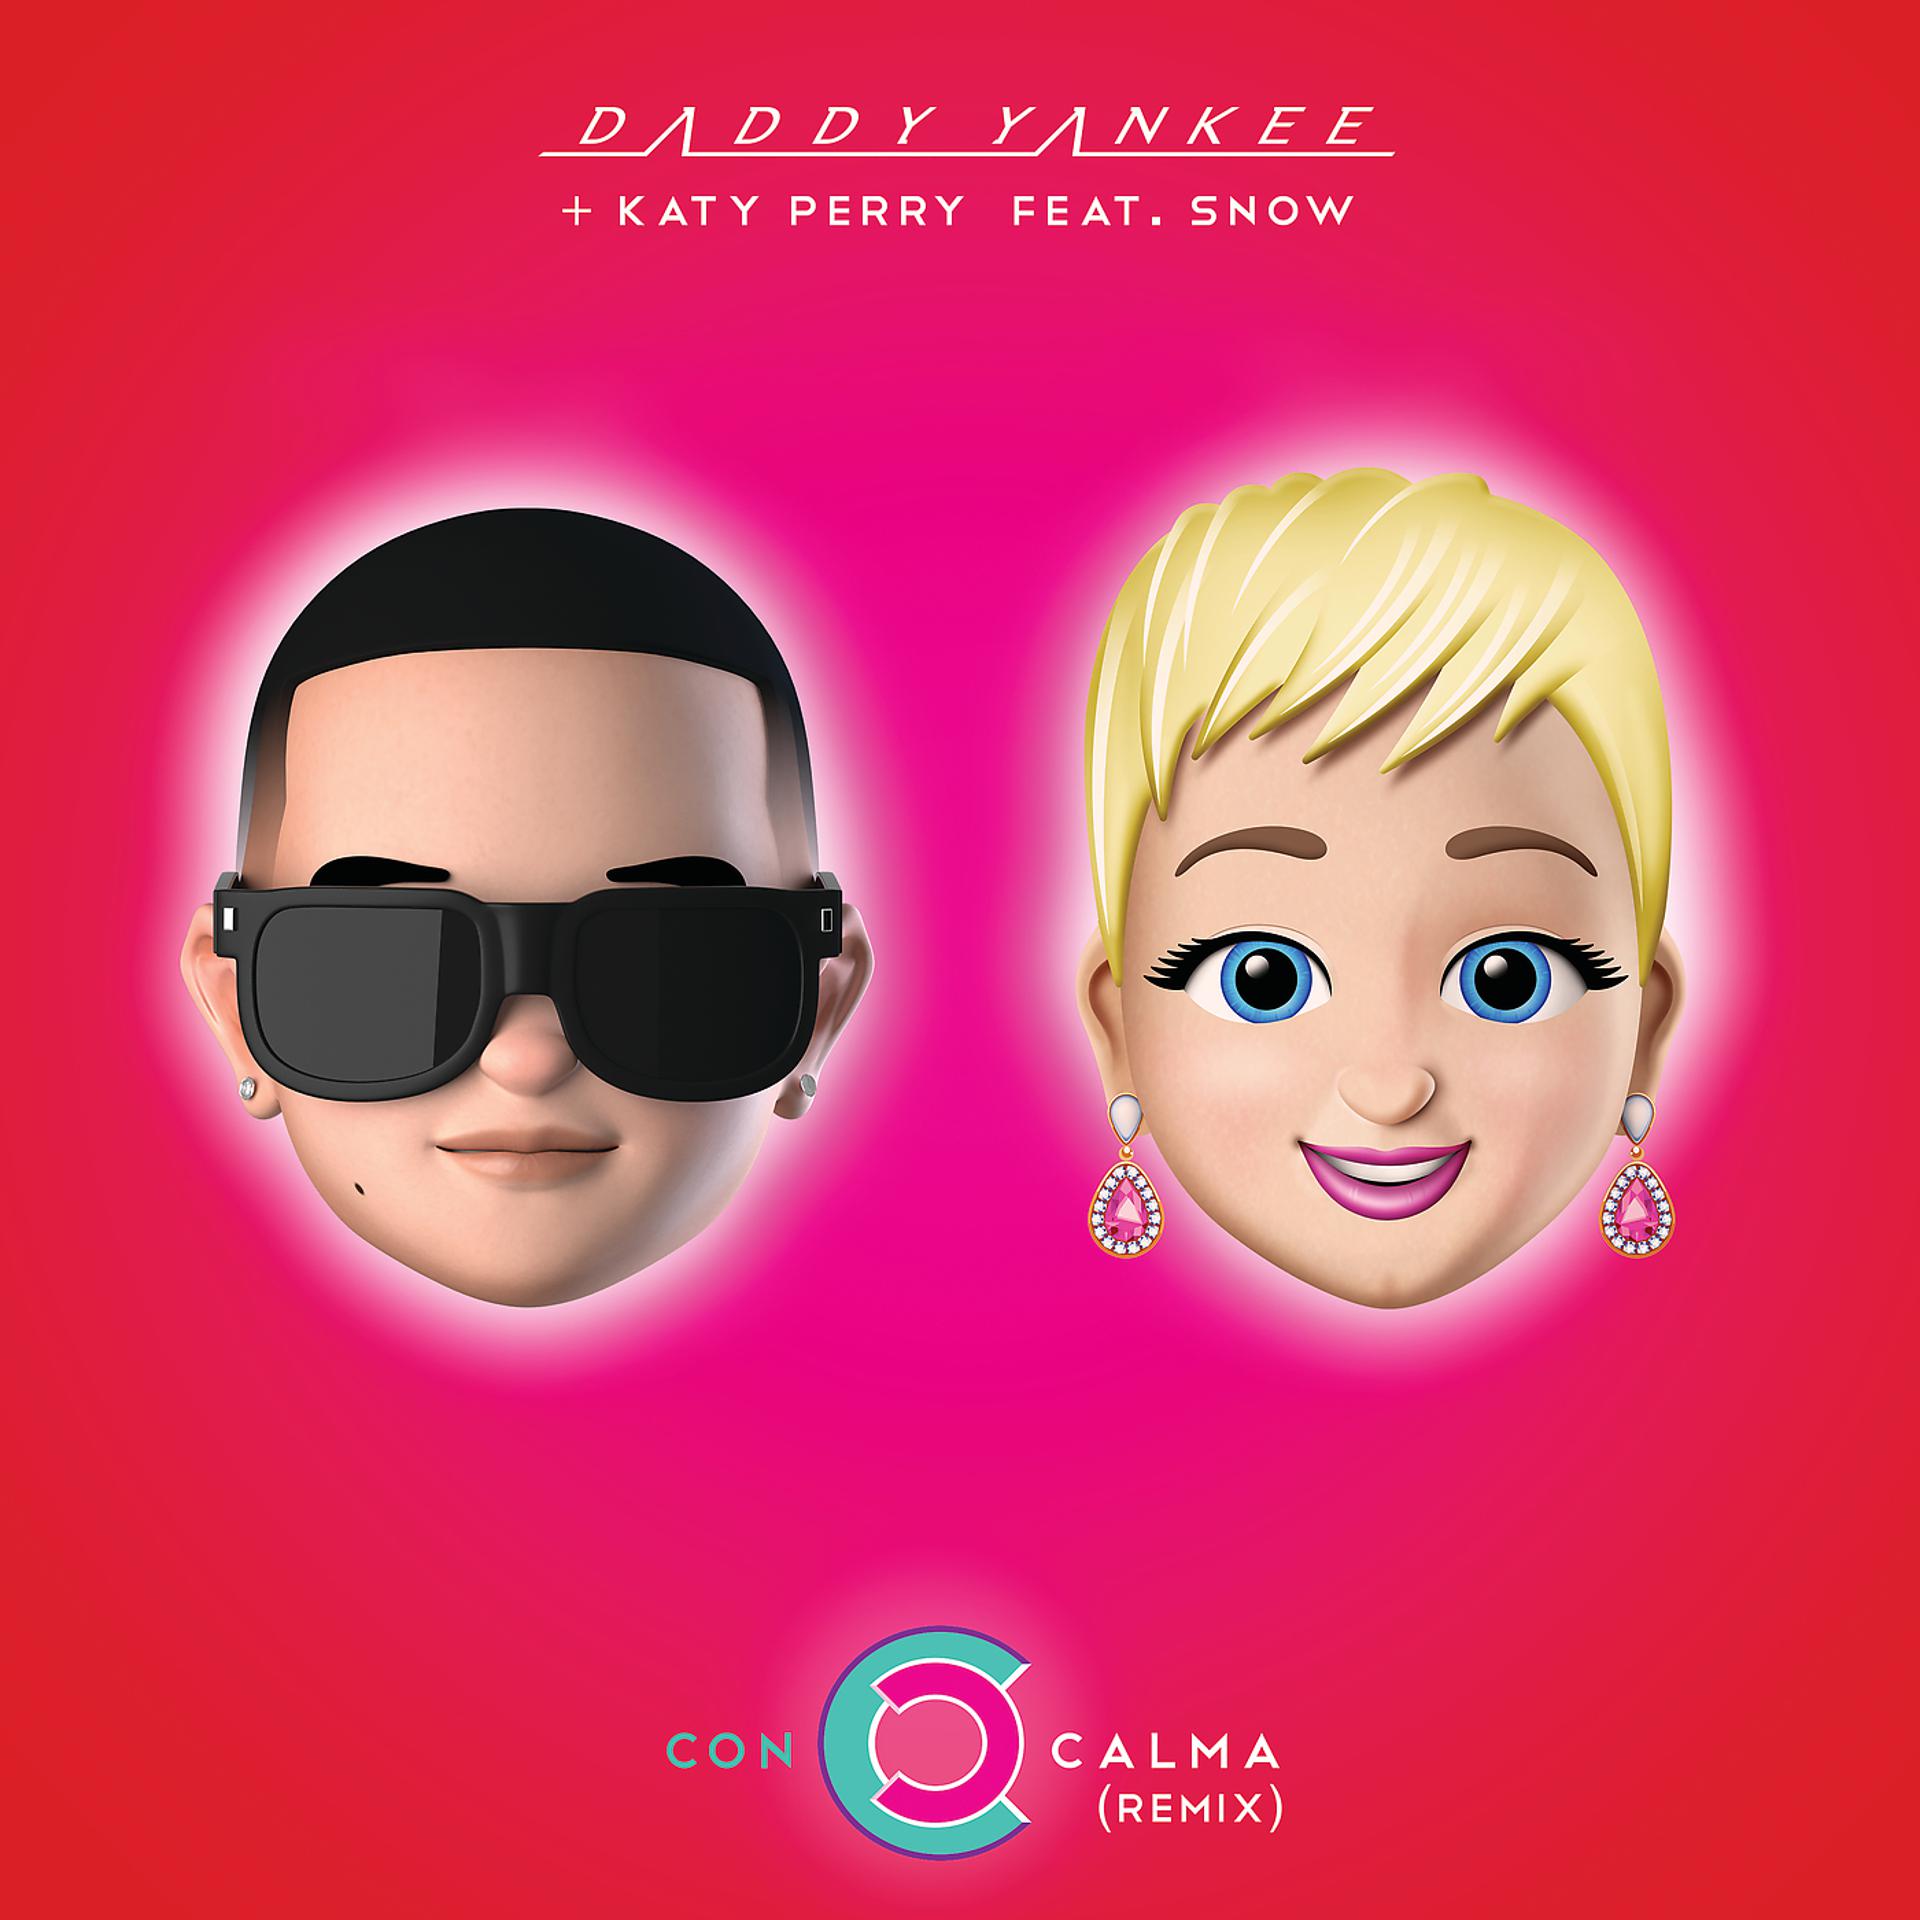 Постер к треку Daddy Yankee, Katy Perry, Snow - Con Calma (Remix)